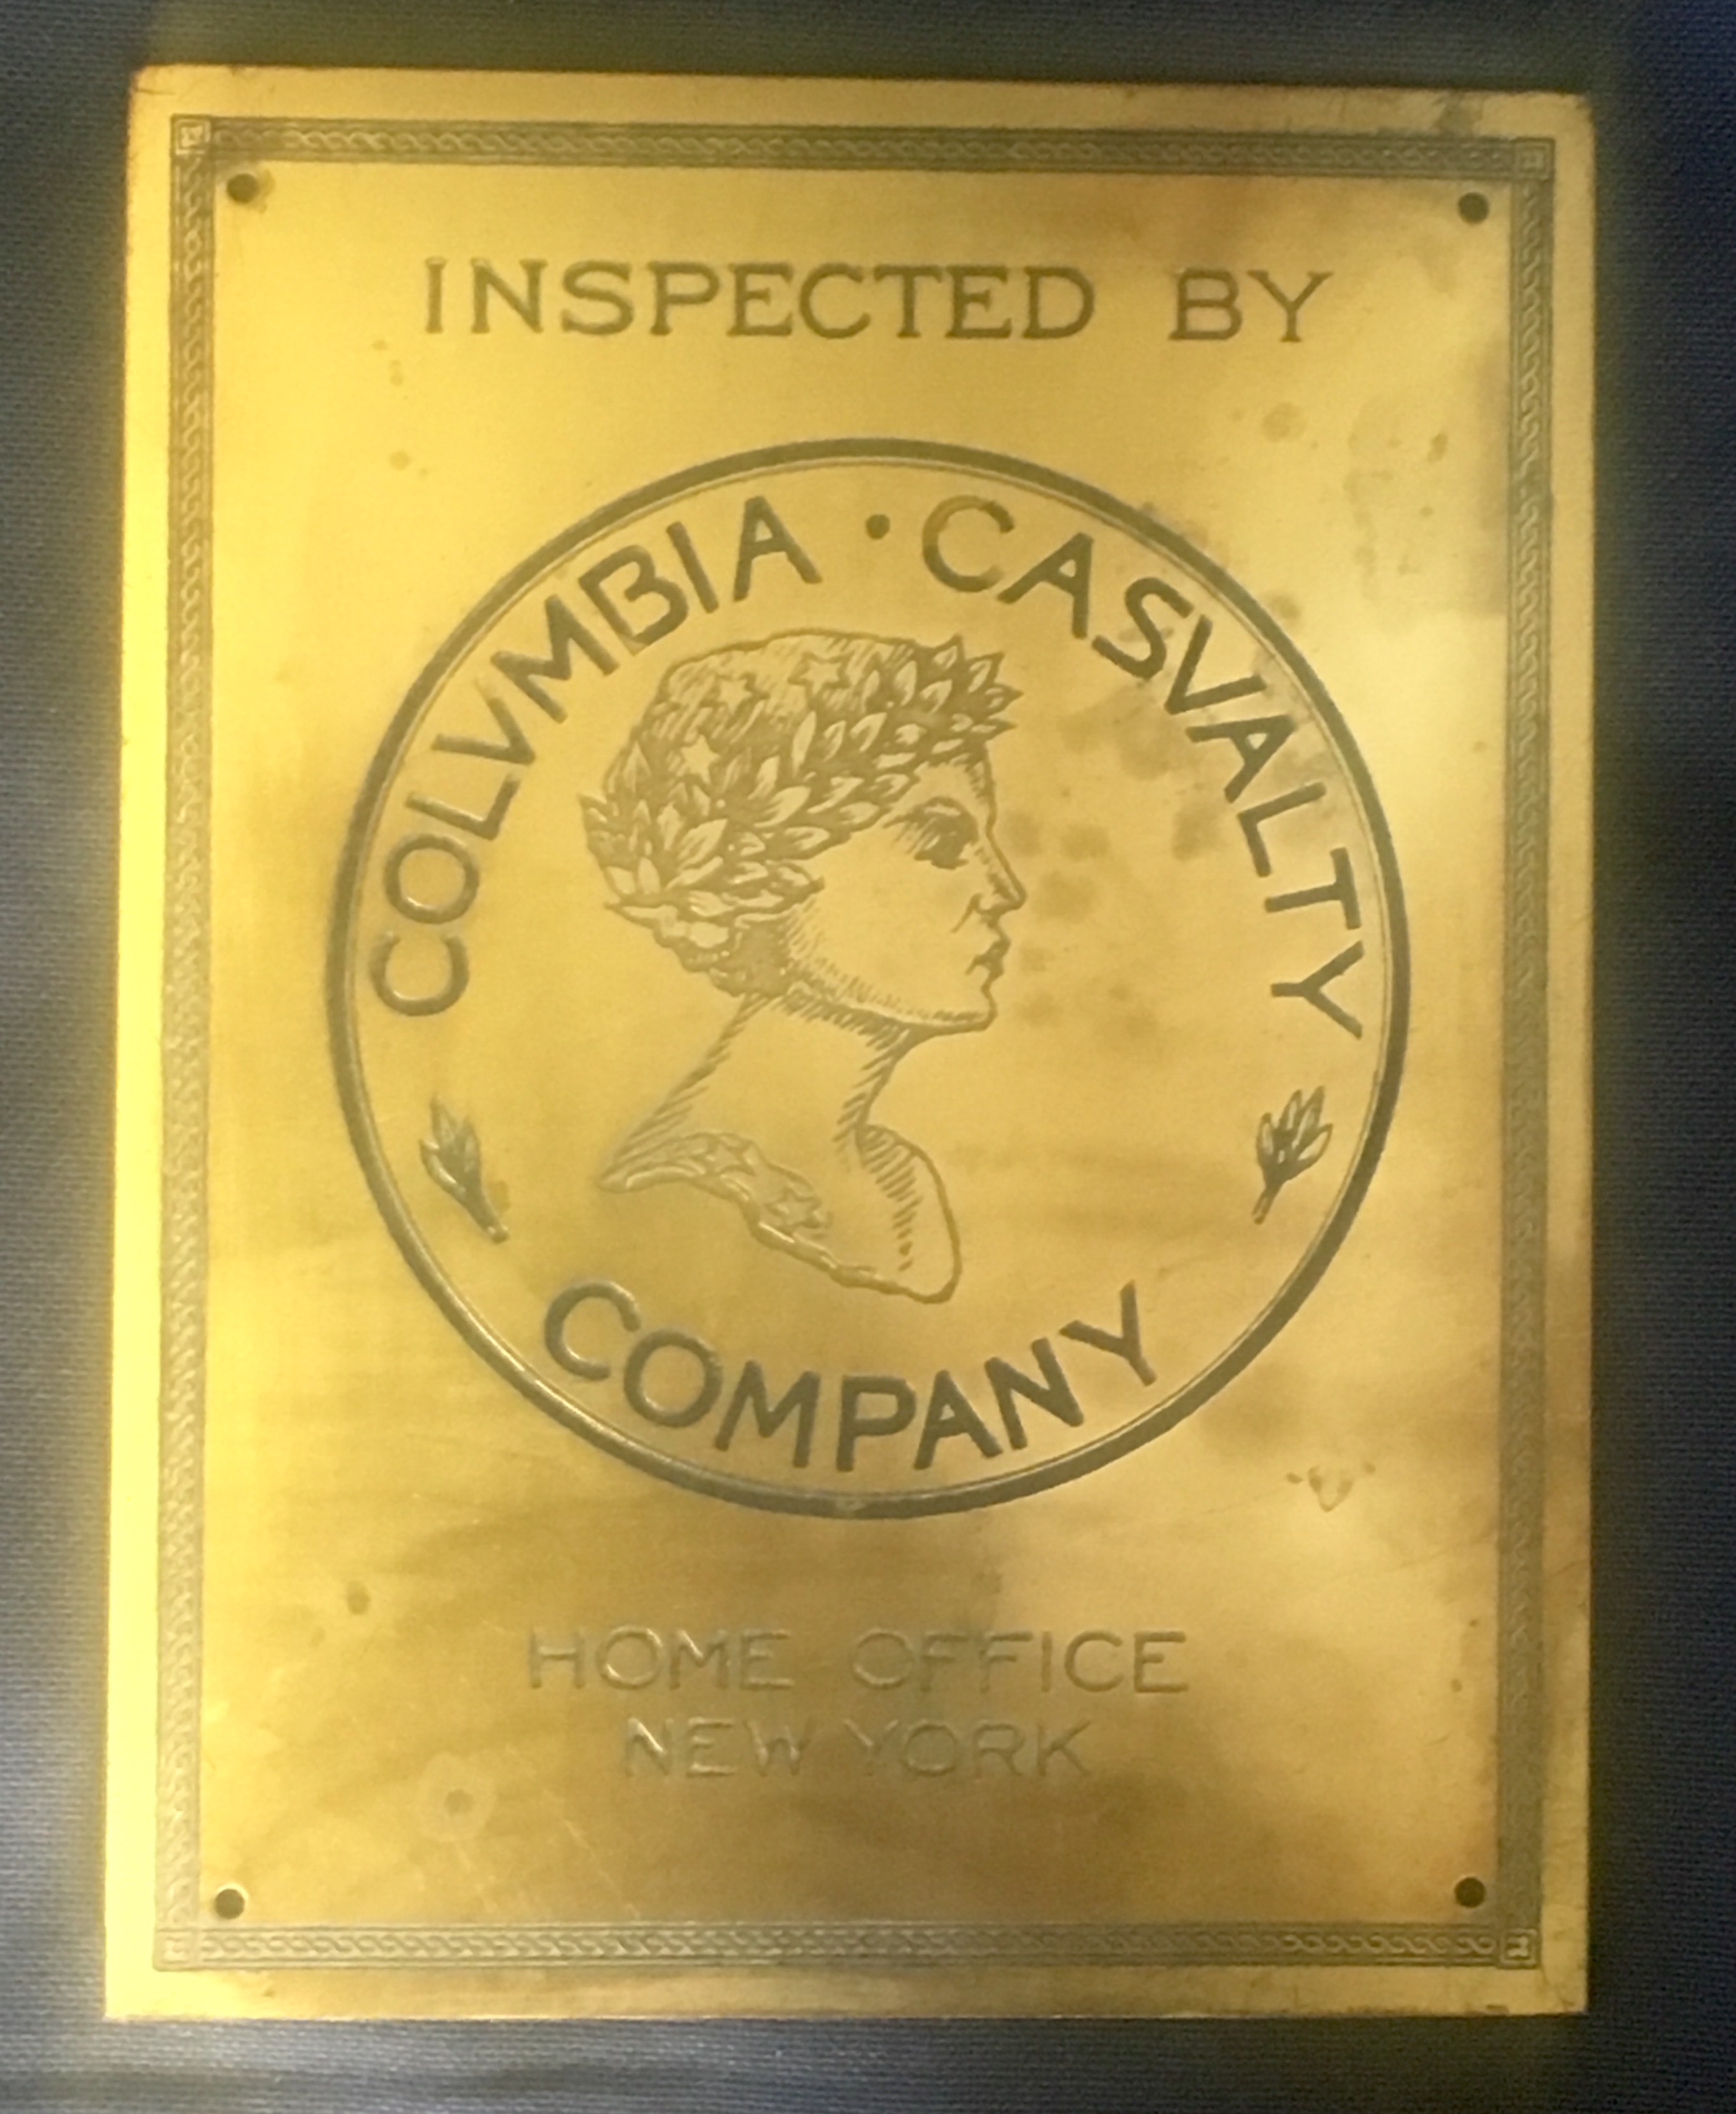 InterNACHI Inspector Museum - Columbia Casualty